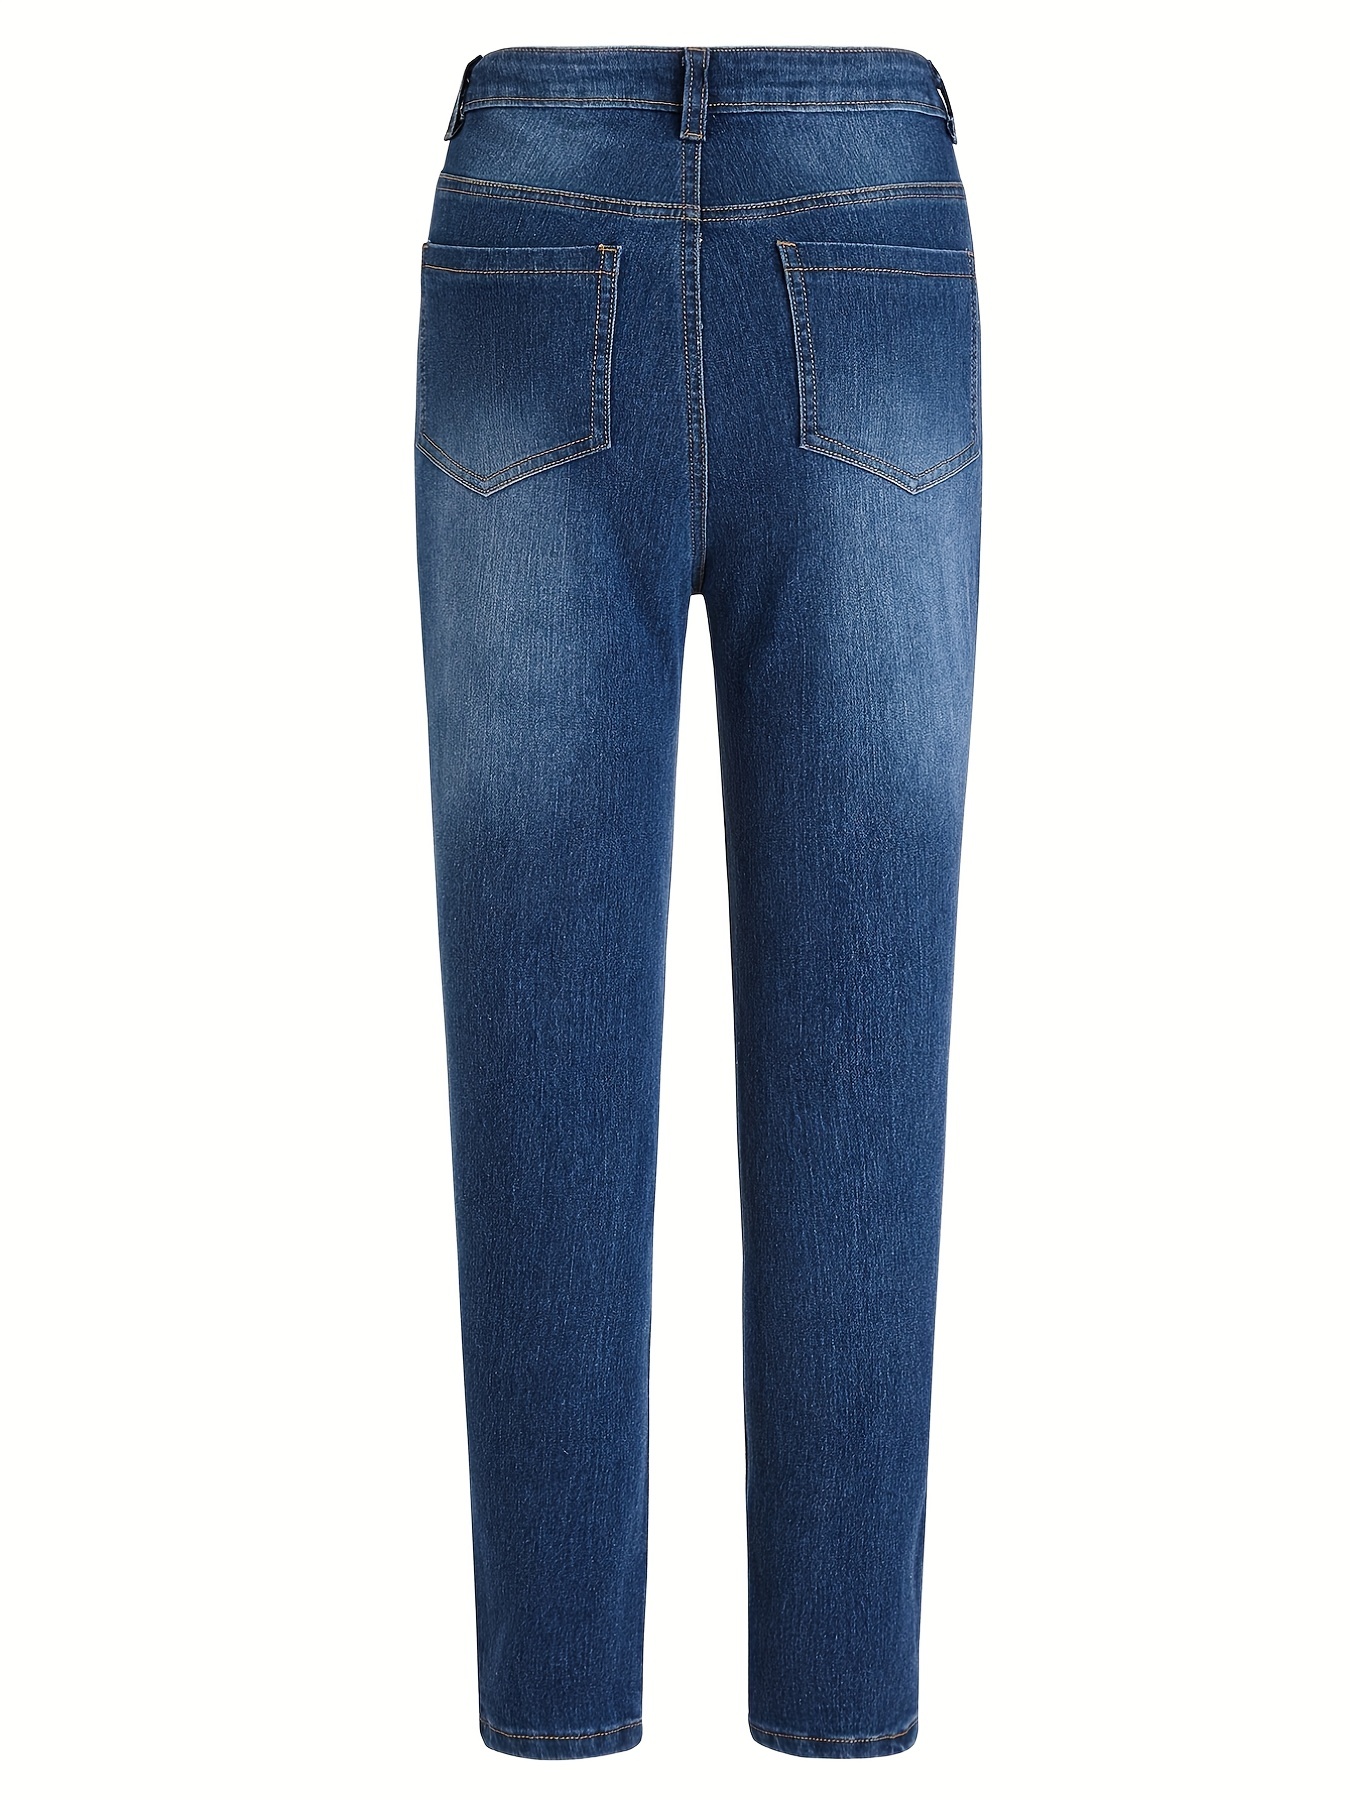 Blue High Stretch Skinny Jeans, Slim Fit Slant Pockets Versatile Tight  Jeans, Women's Denim Jeans & Clothing